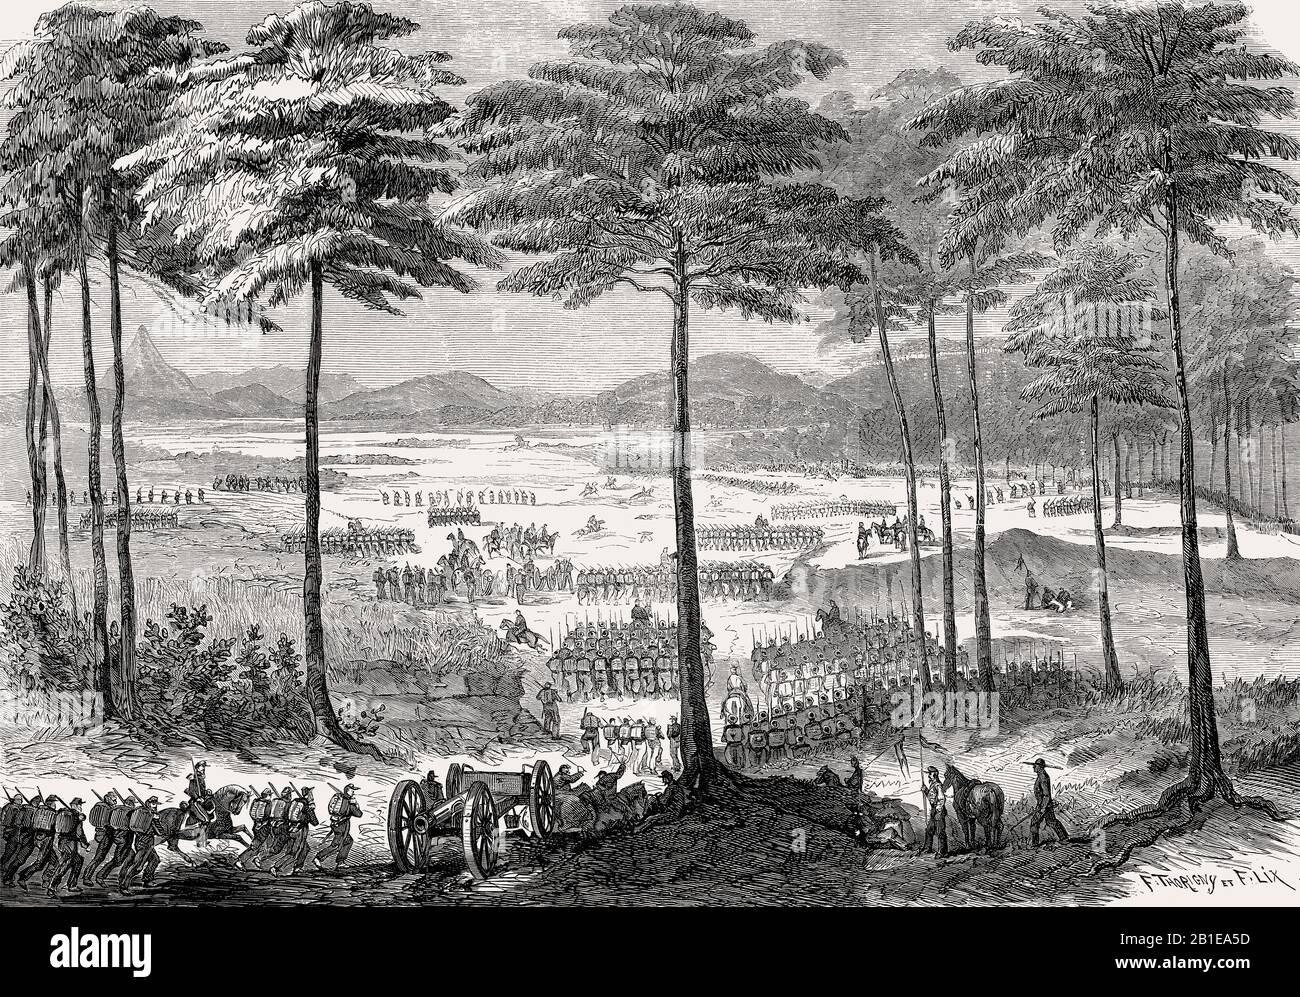 Batalla del Cerro del Borrego, Orizaba, estado de Veracruz, México, Segunda Guerra Franco-Mexicana, 1862 Foto de stock